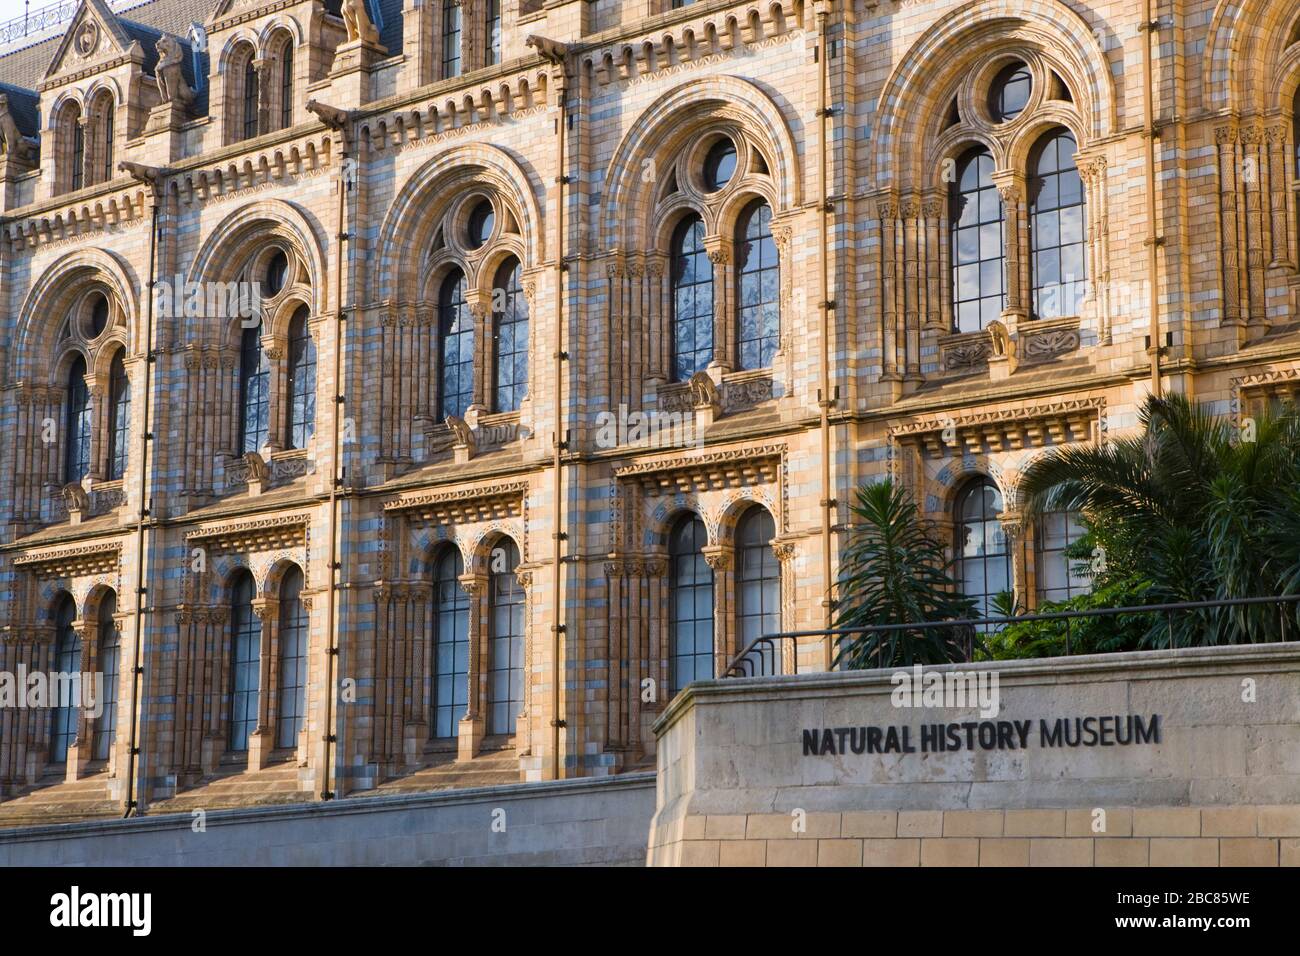 Natural History Museum, London, UK Banque D'Images